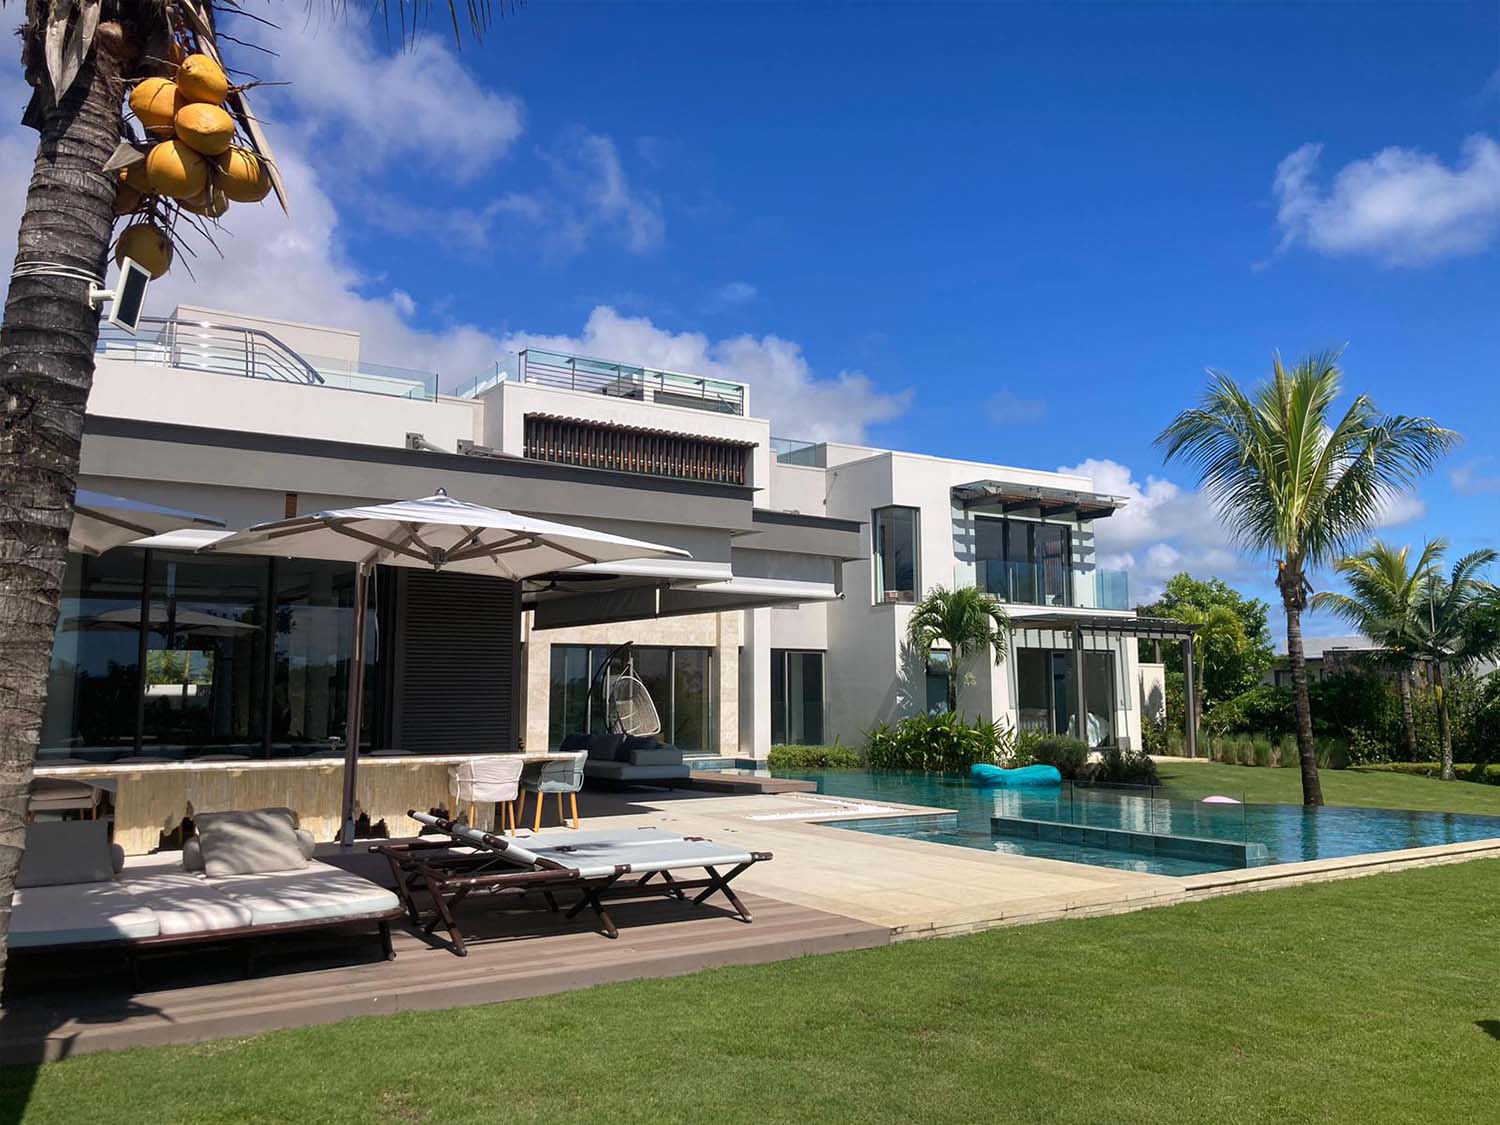 Rental of the villa Sunset Paradise, an exceptional villa at Anahita Golf Club, Mauritius